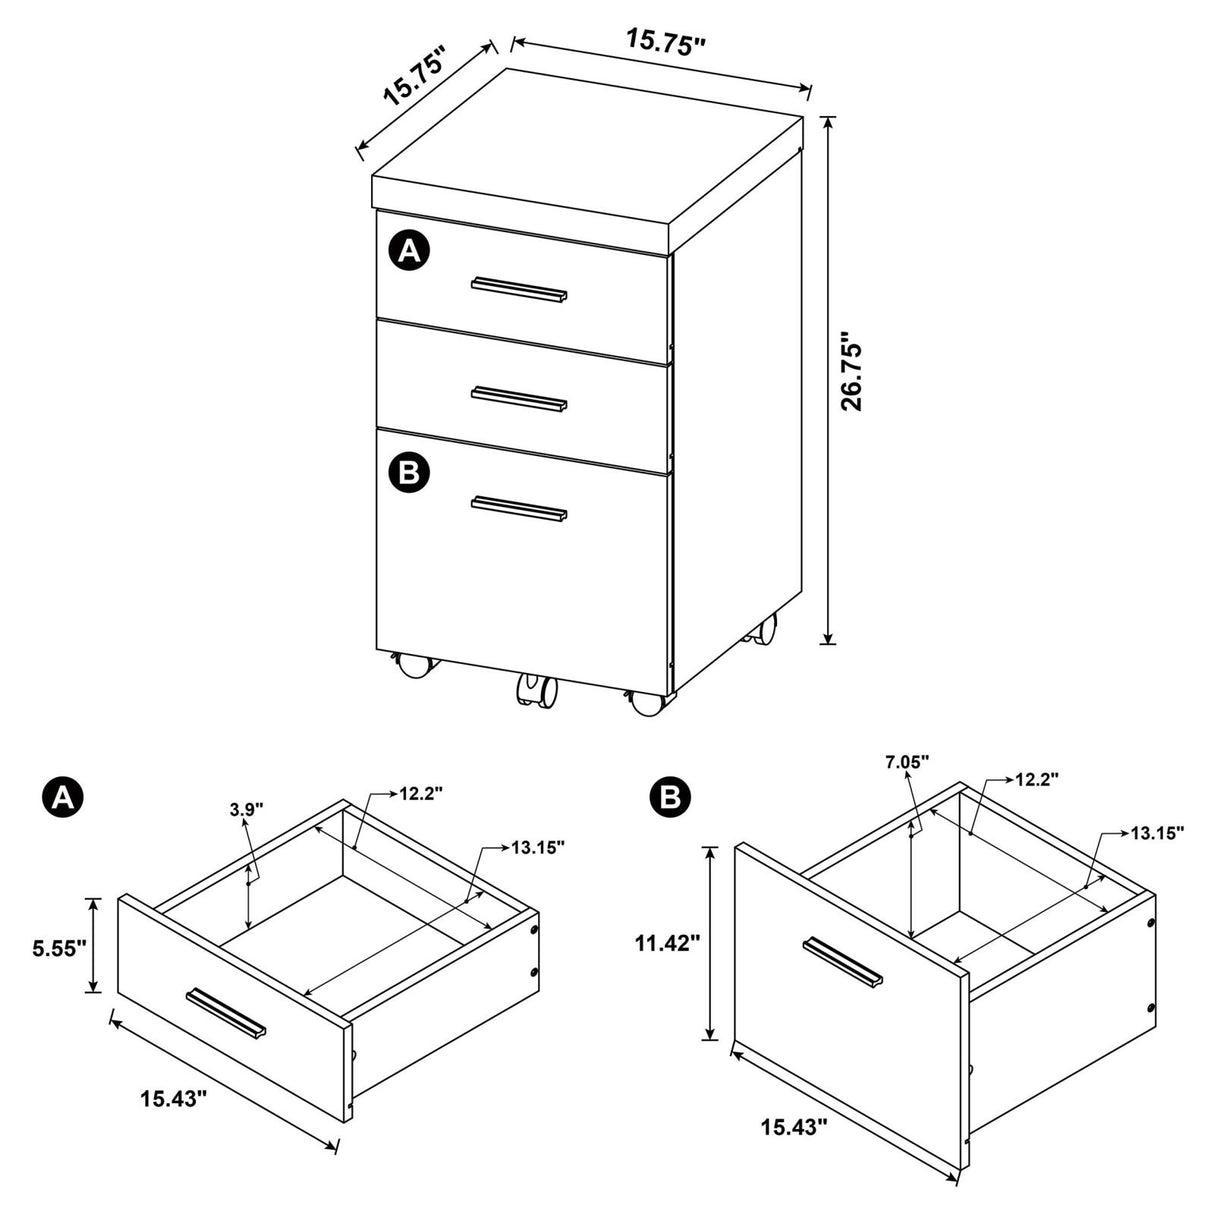 Skeena 3-drawer Mobile Storage Cabinet Cappuccino - 800903 - Luna Furniture